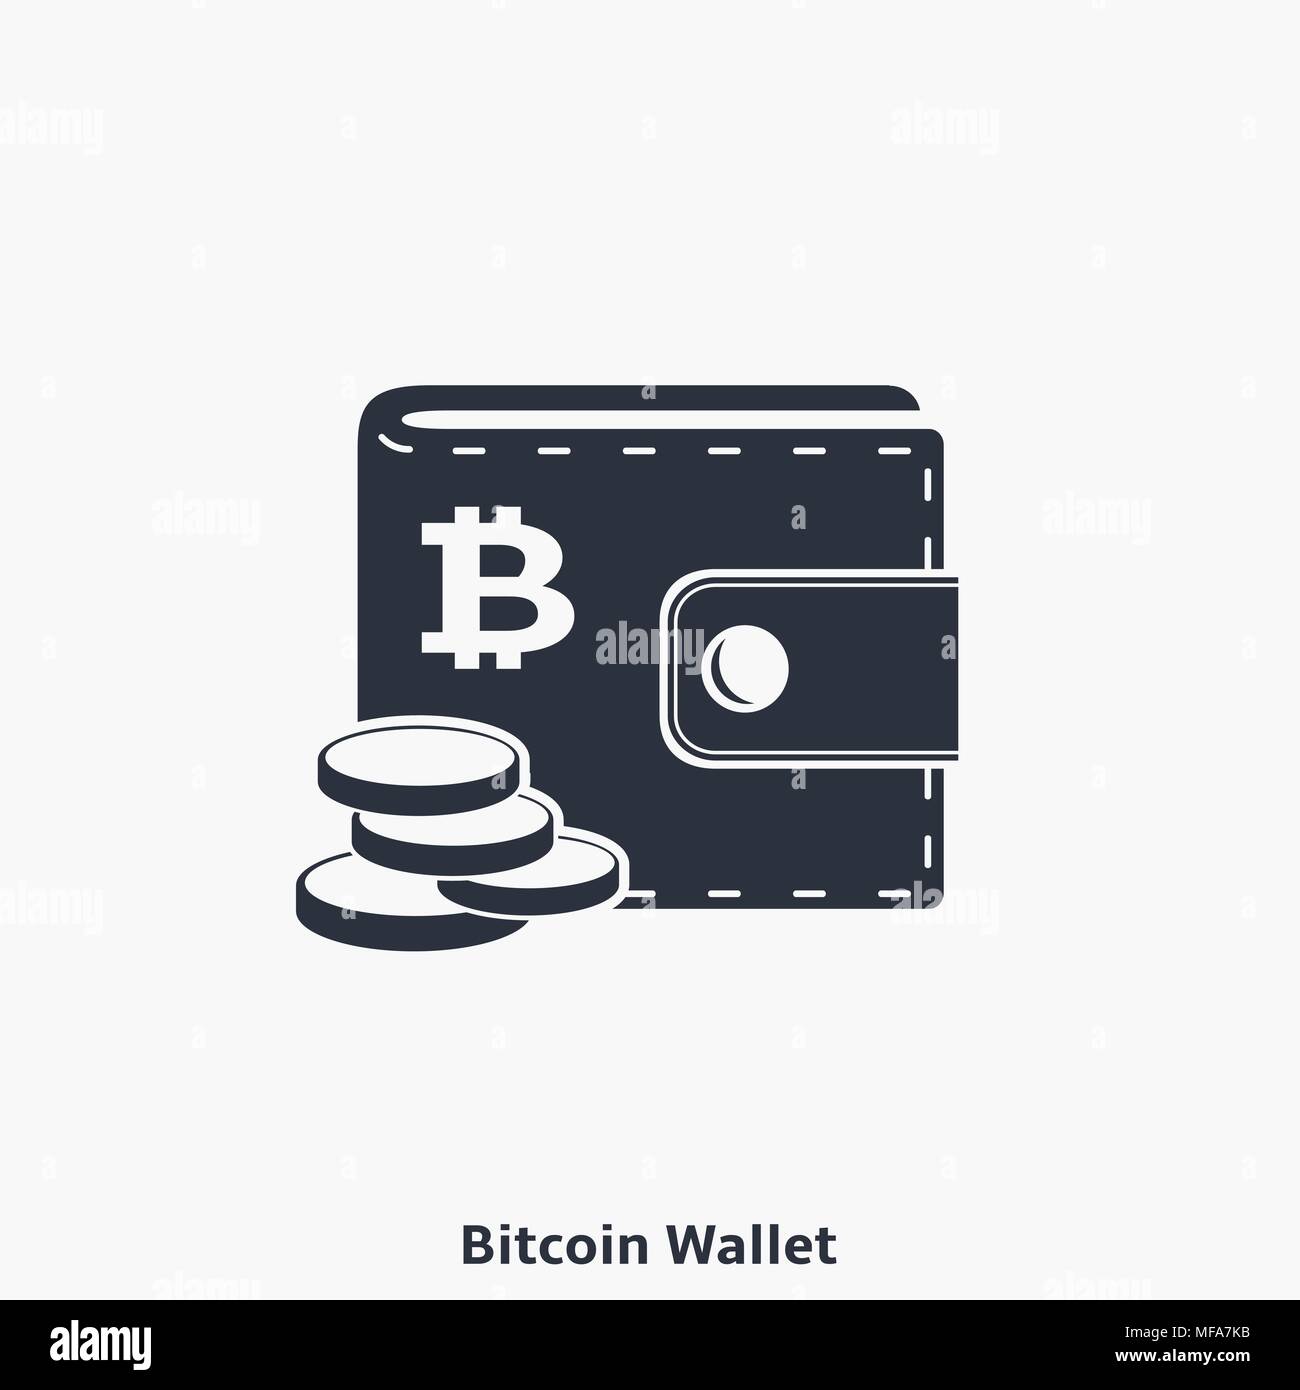 Billetera bitcoin Imágenes vectoriales de stock - Alamy